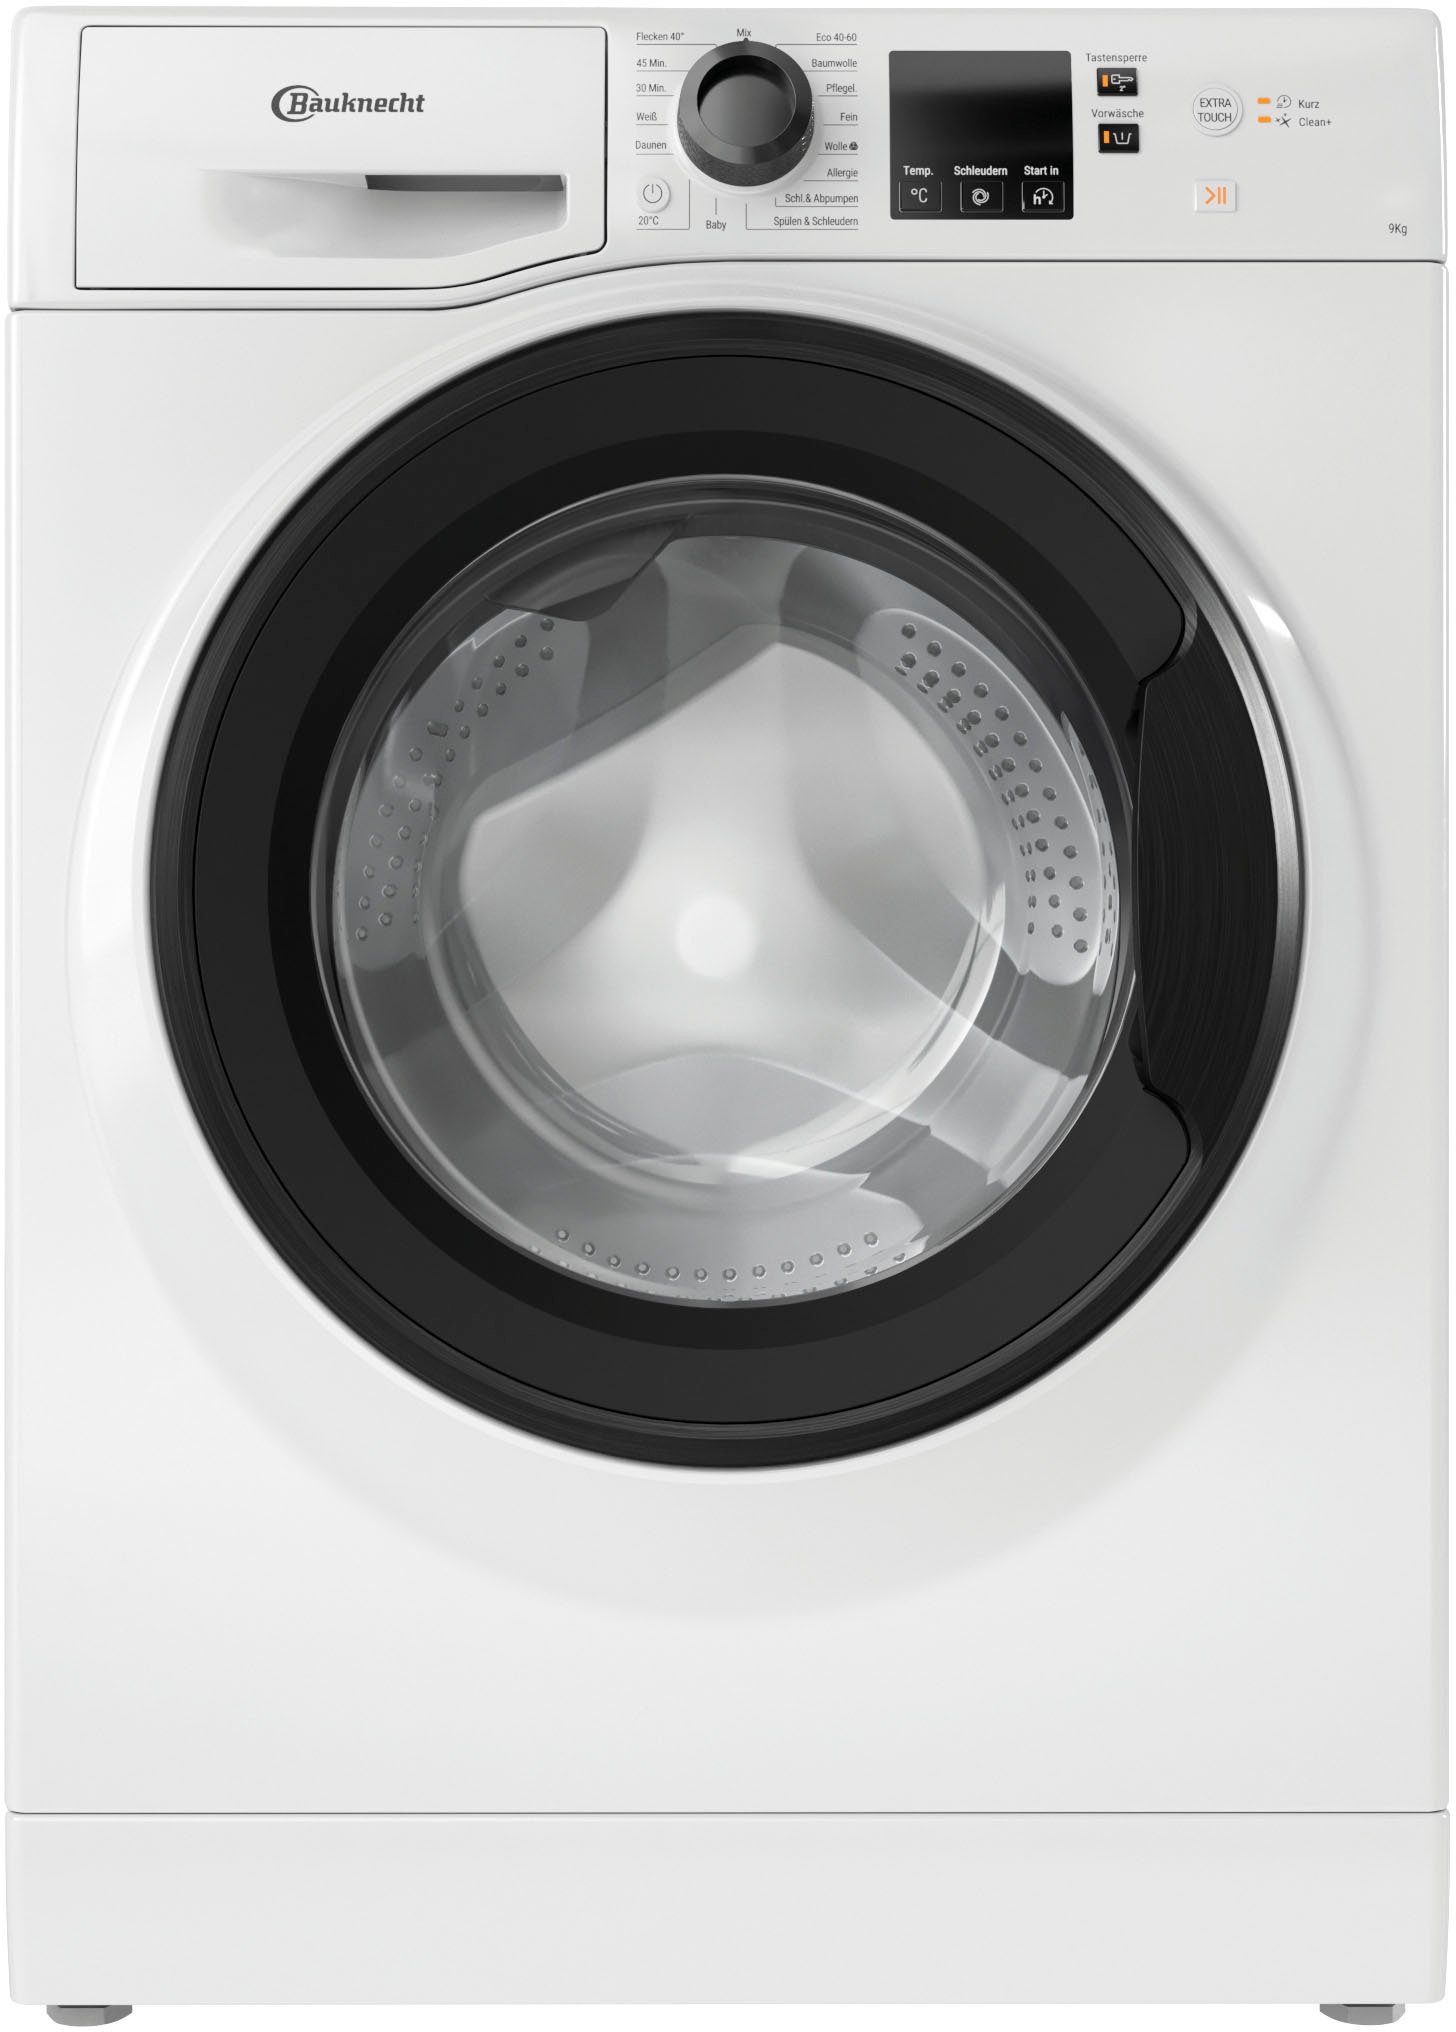 BAUKNECHT Waschmaschine BPW 914 9 kg, U/min 1400 B